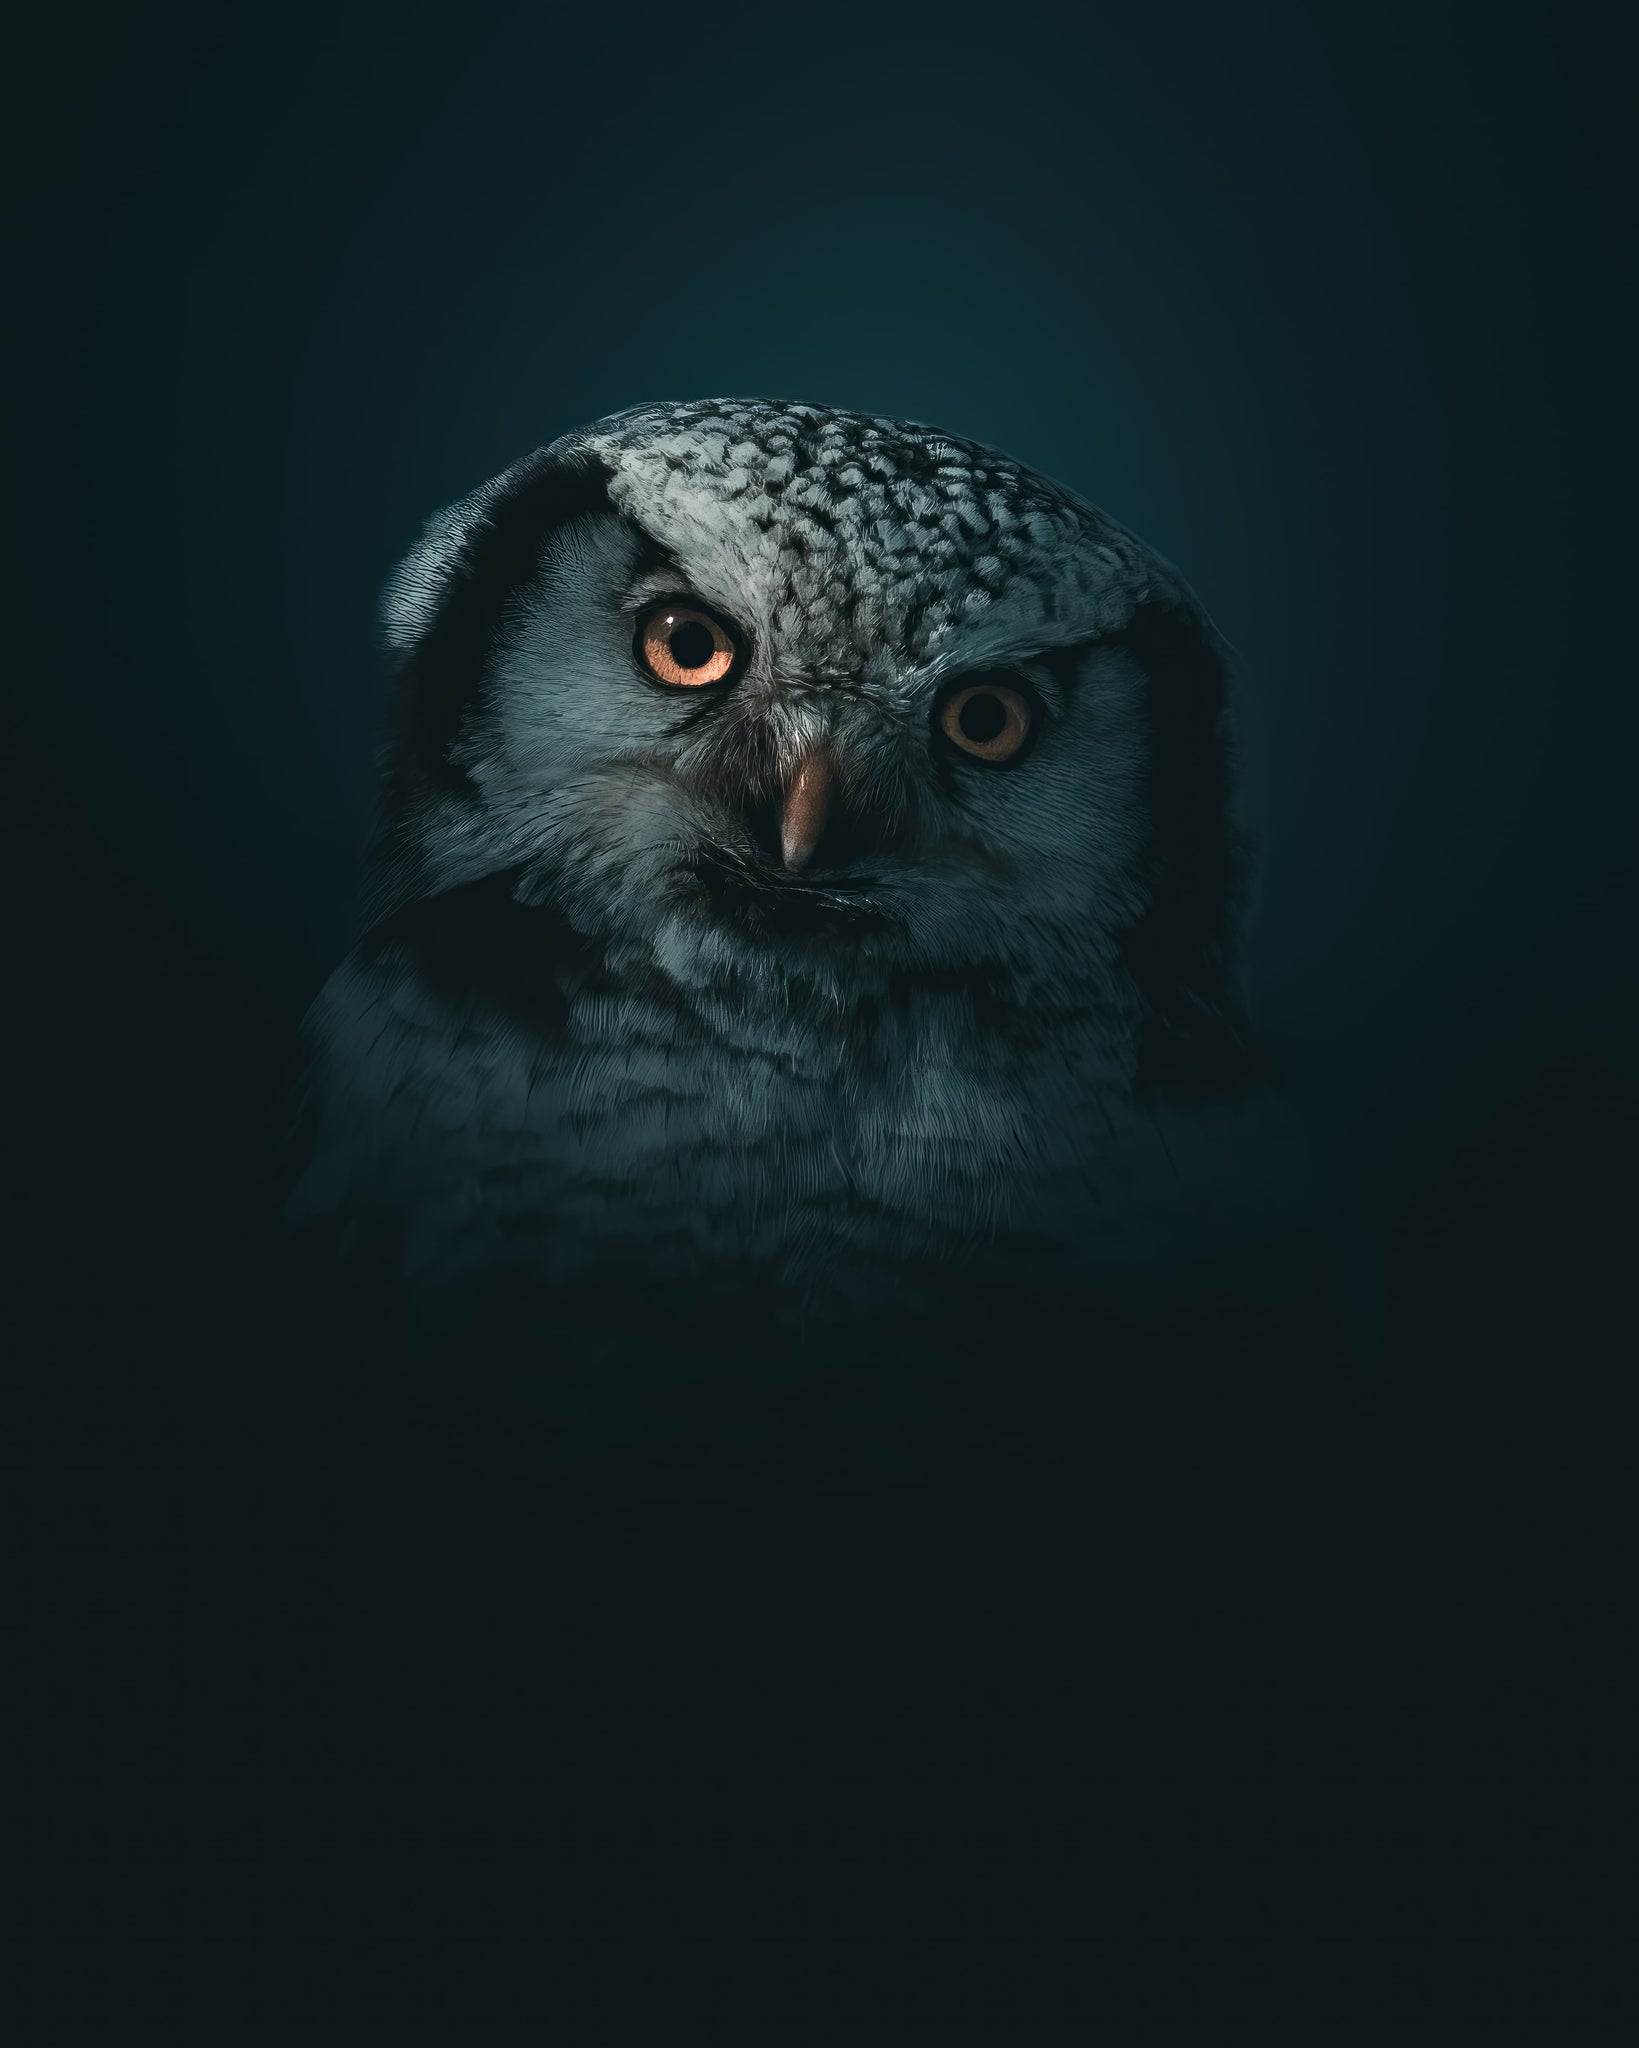 Portrait shot of an owl